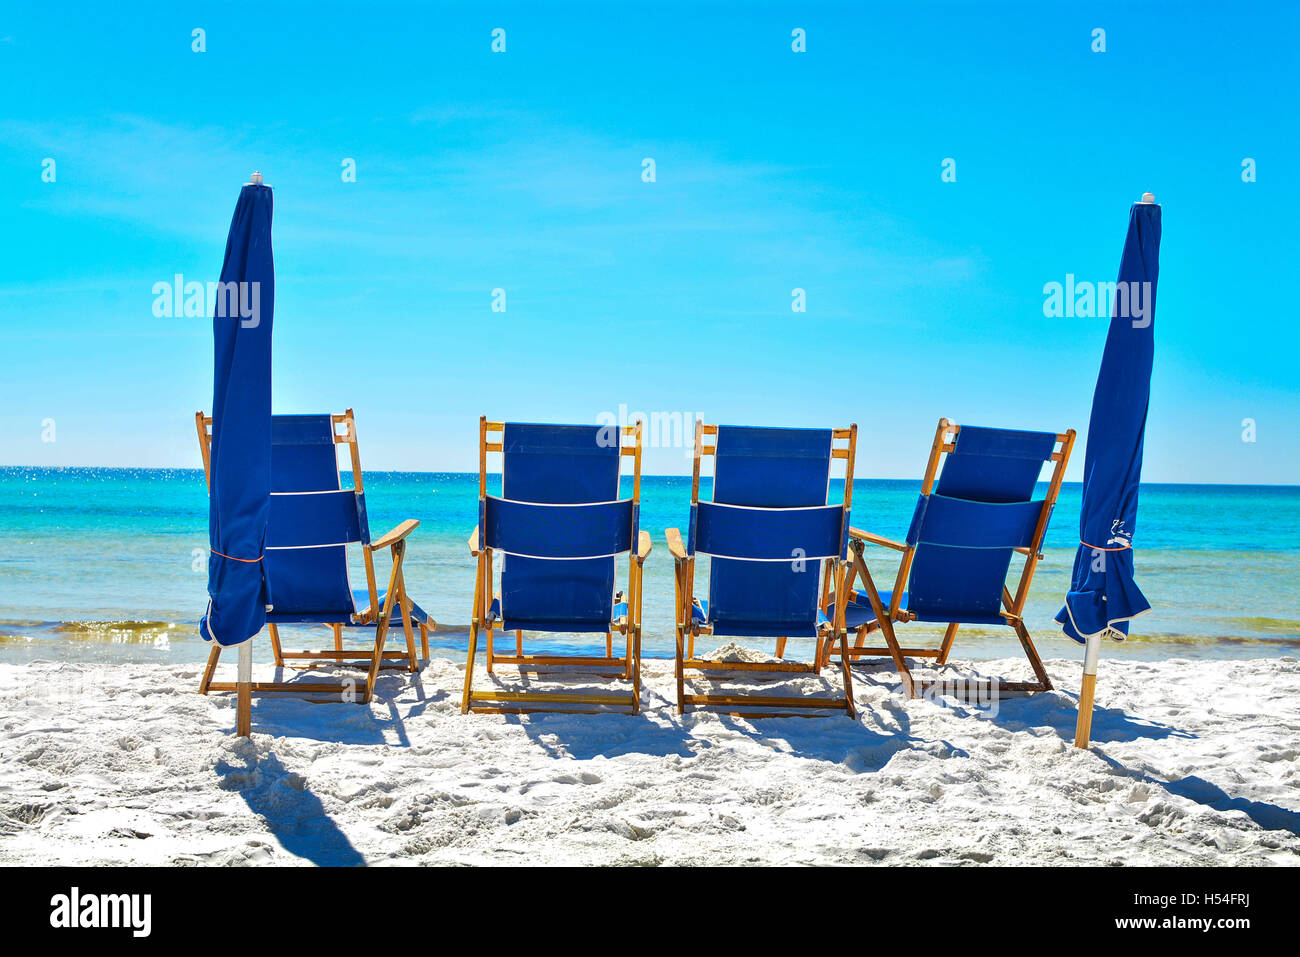 Chaise longues on beach with umbrellas in Destin Sandestin Florida Stock Photo